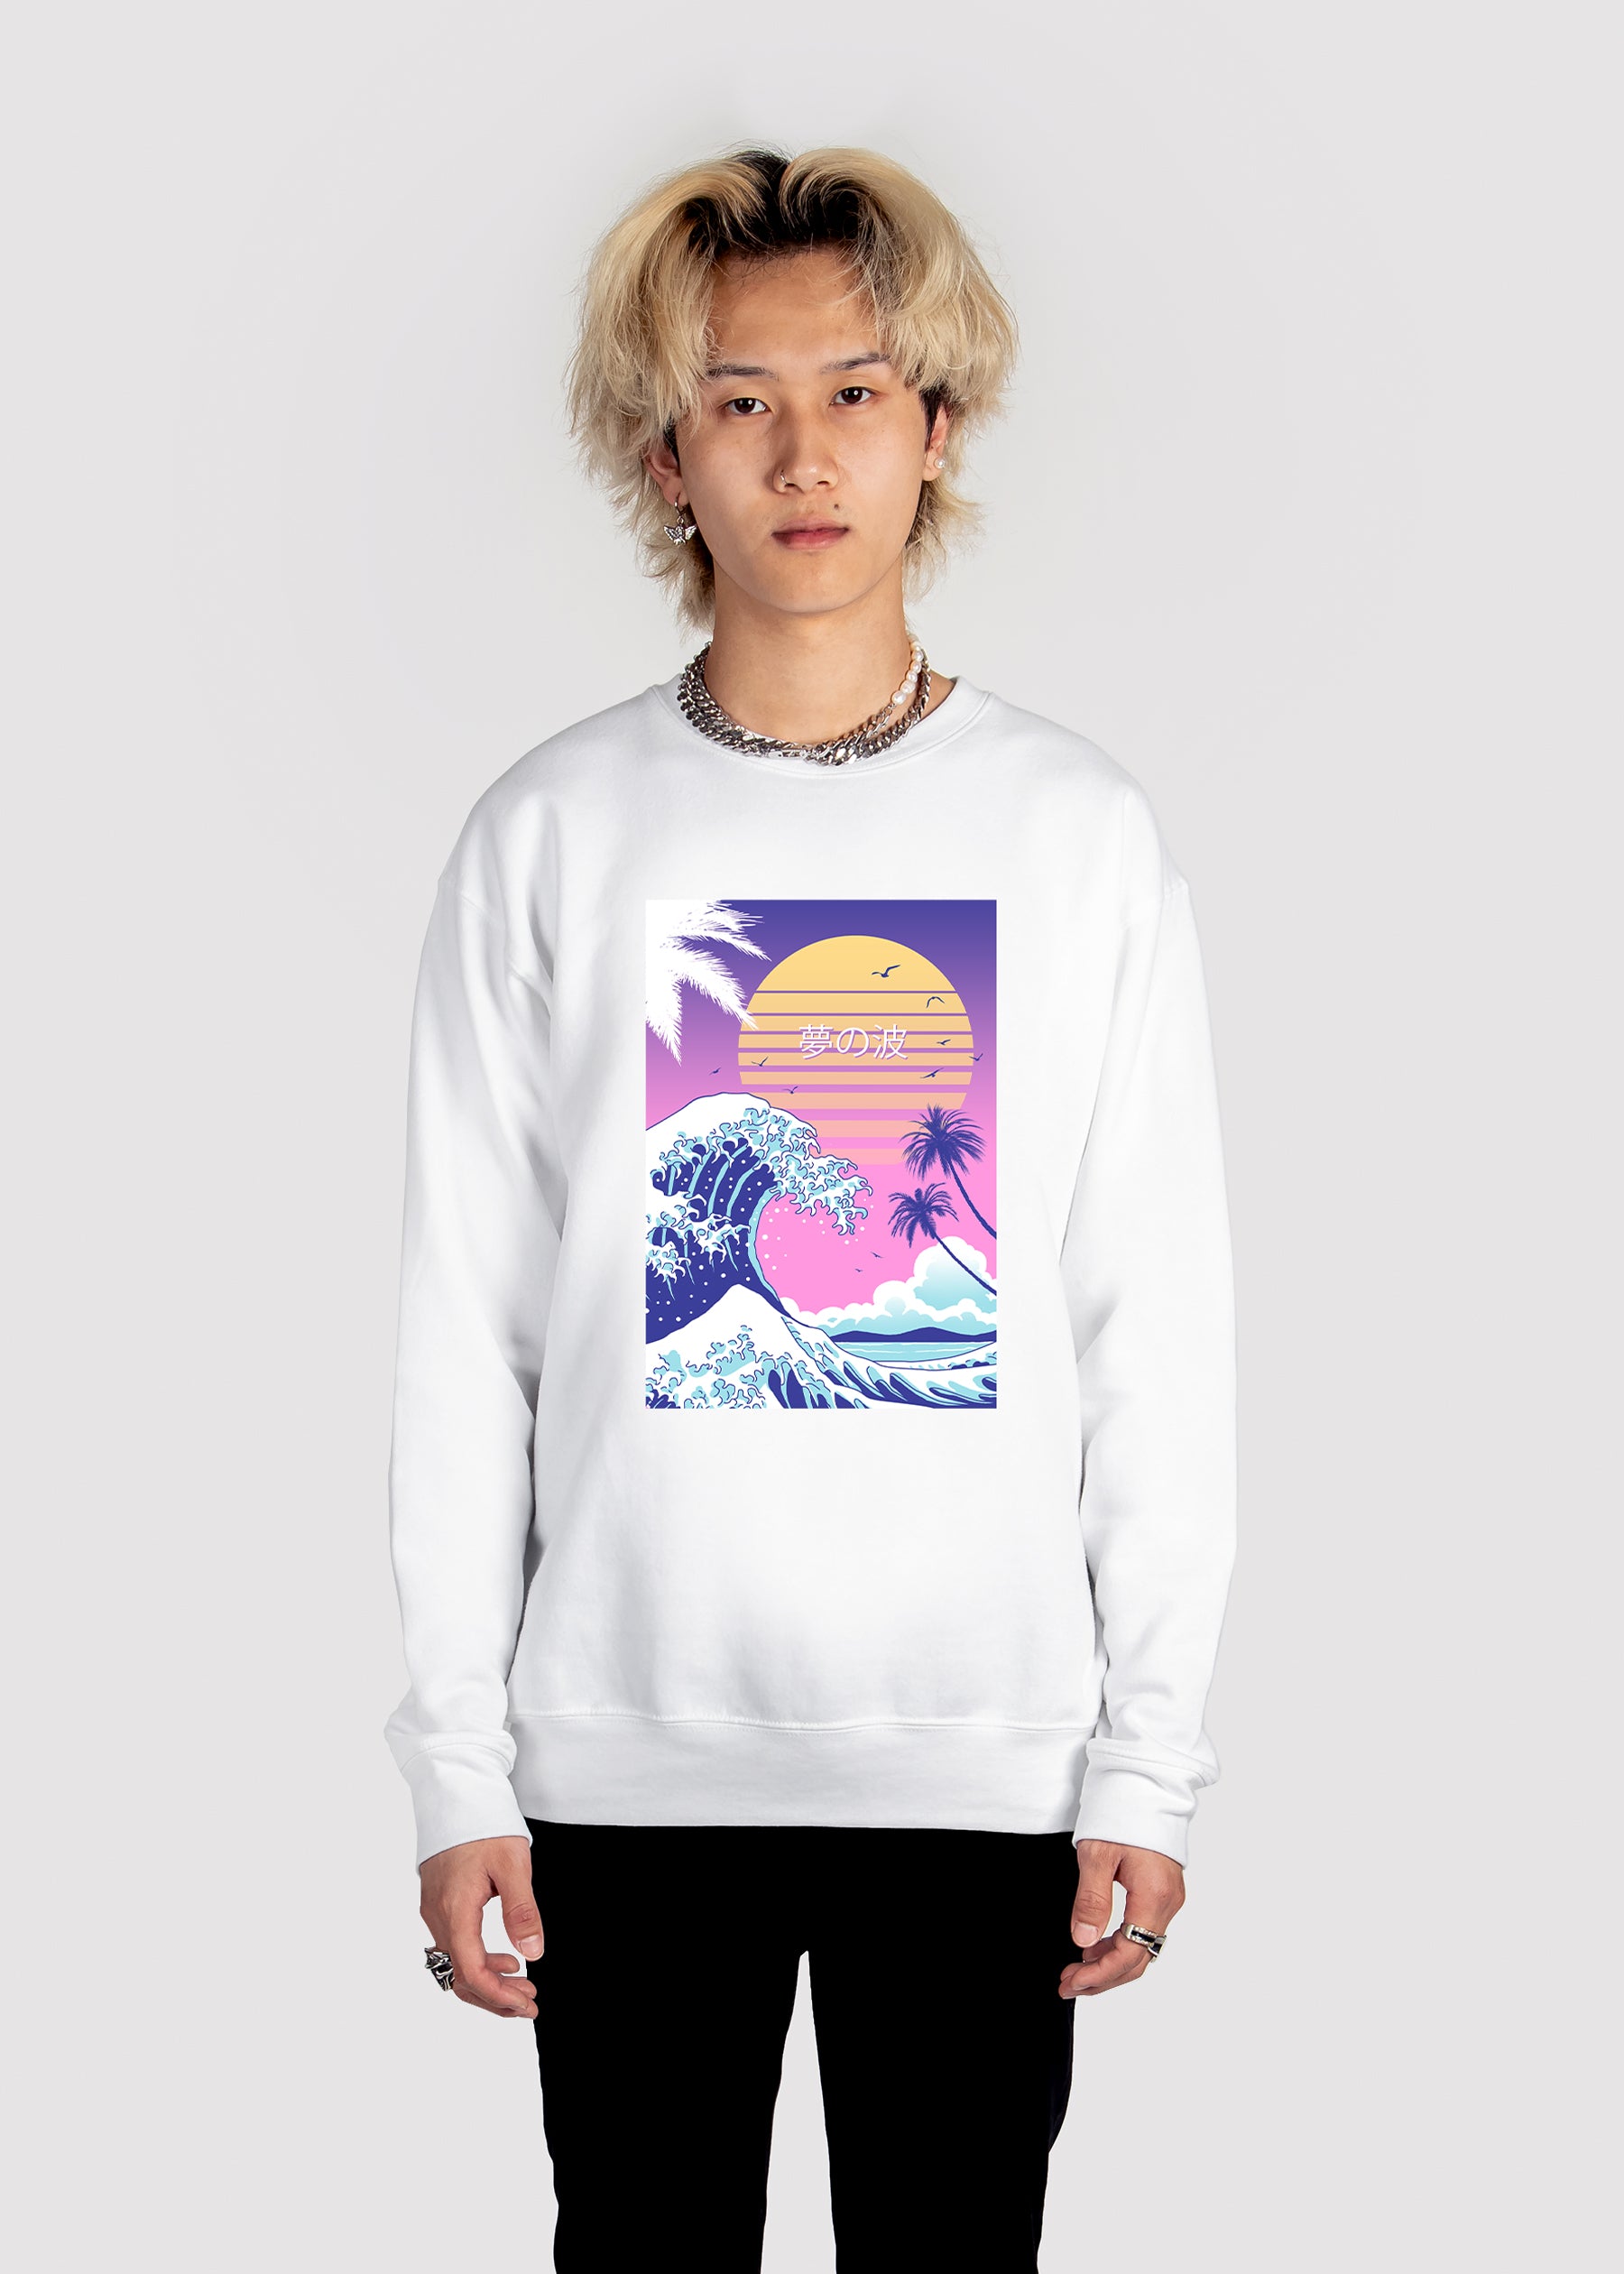 Sunset Over Japan Sweatshirt